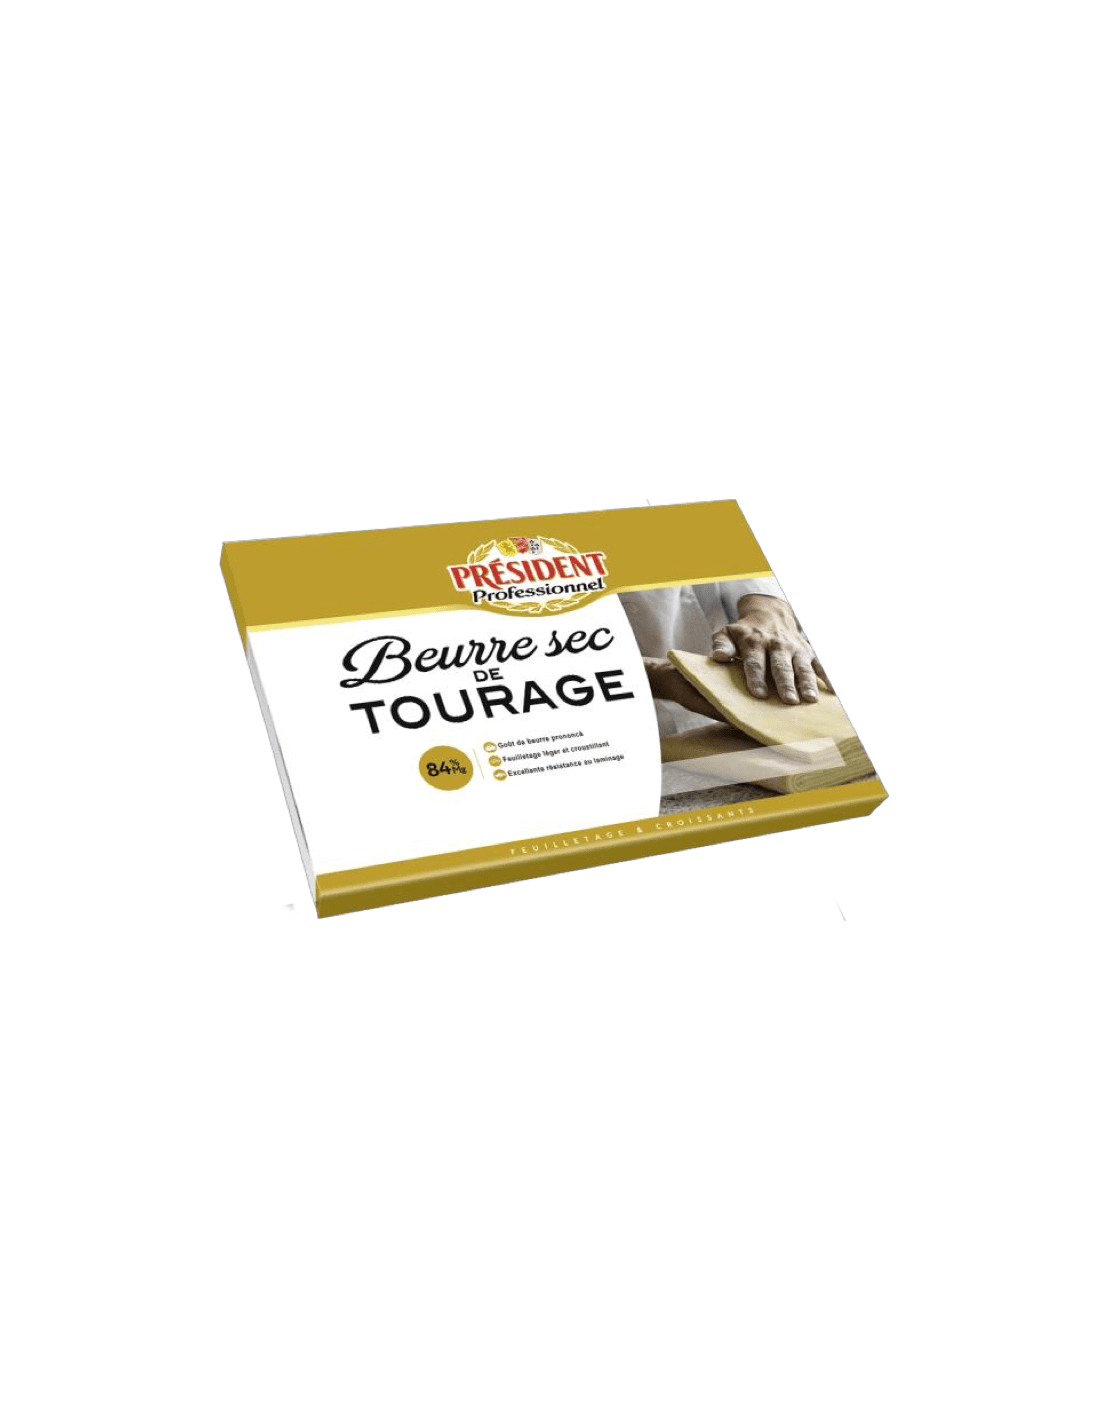 Beurre sec Tourage 84% Plaque 2 kg - Eurodistribution